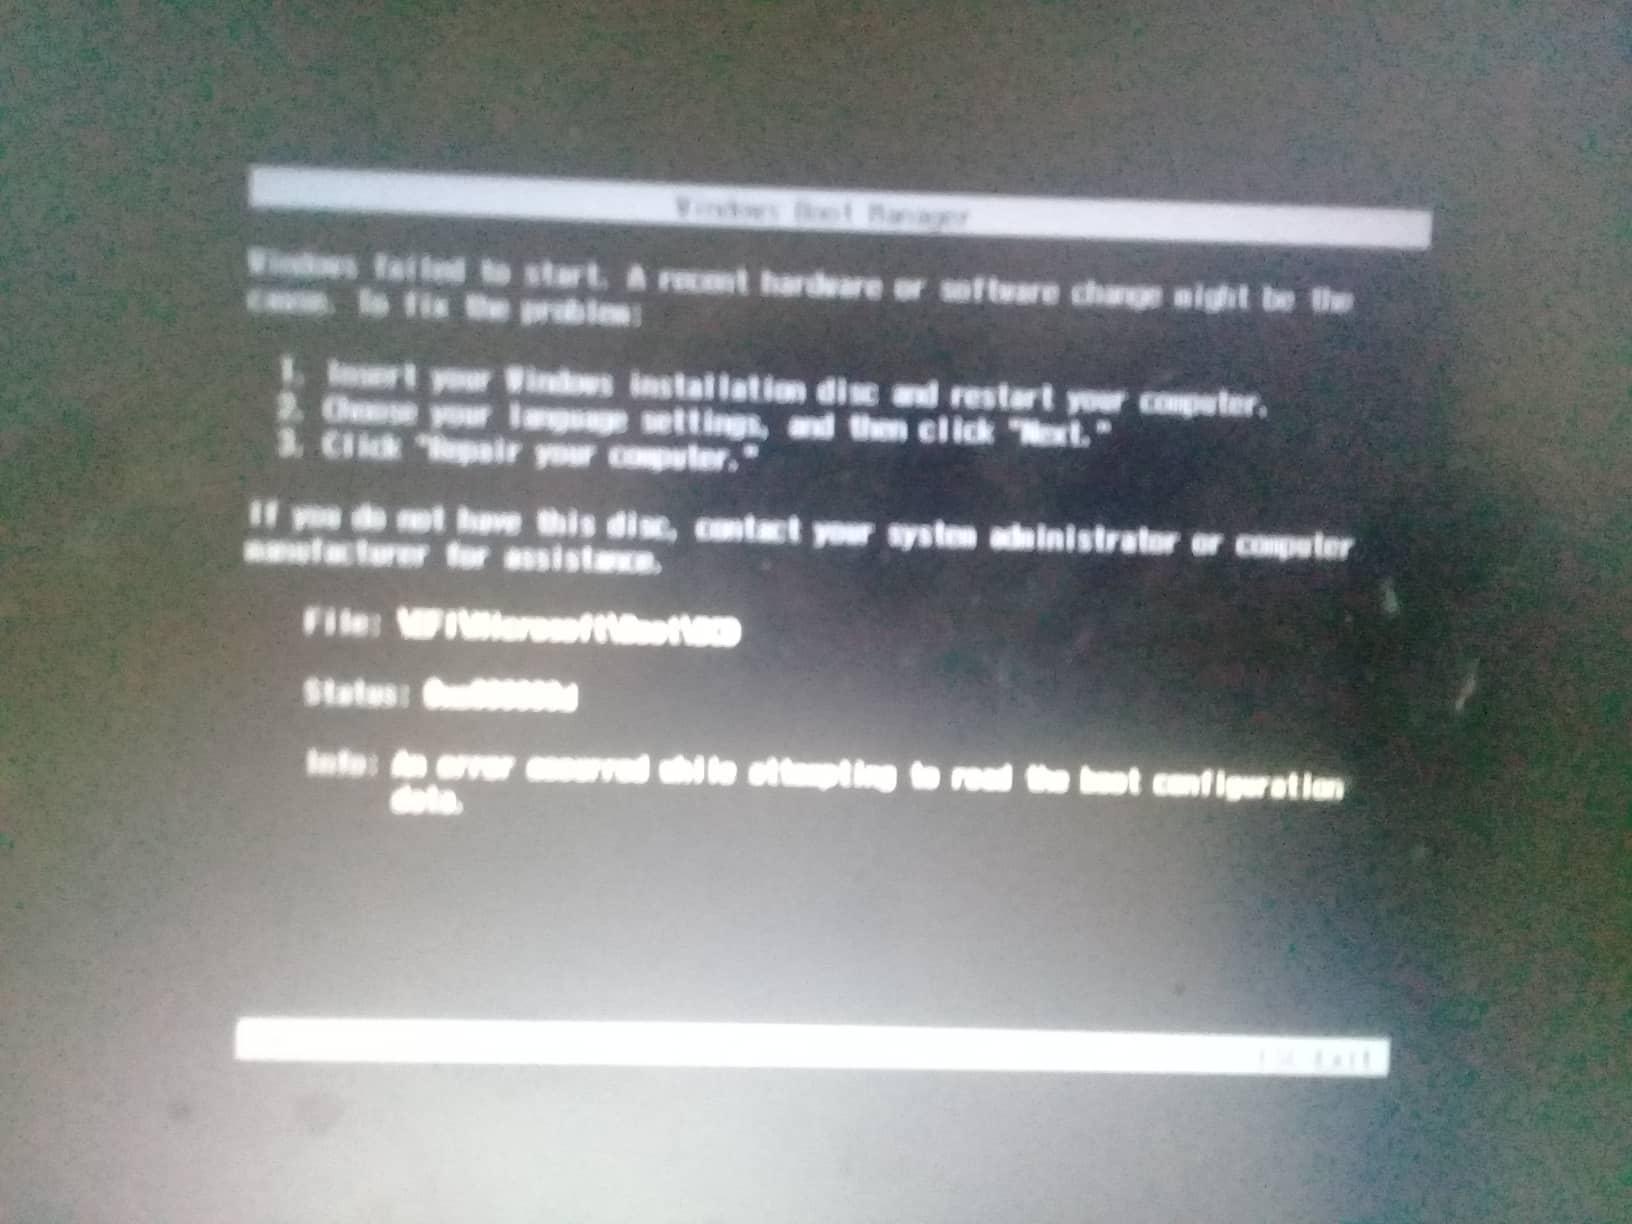 error with install windows 7 pvbPPtQ.jpg